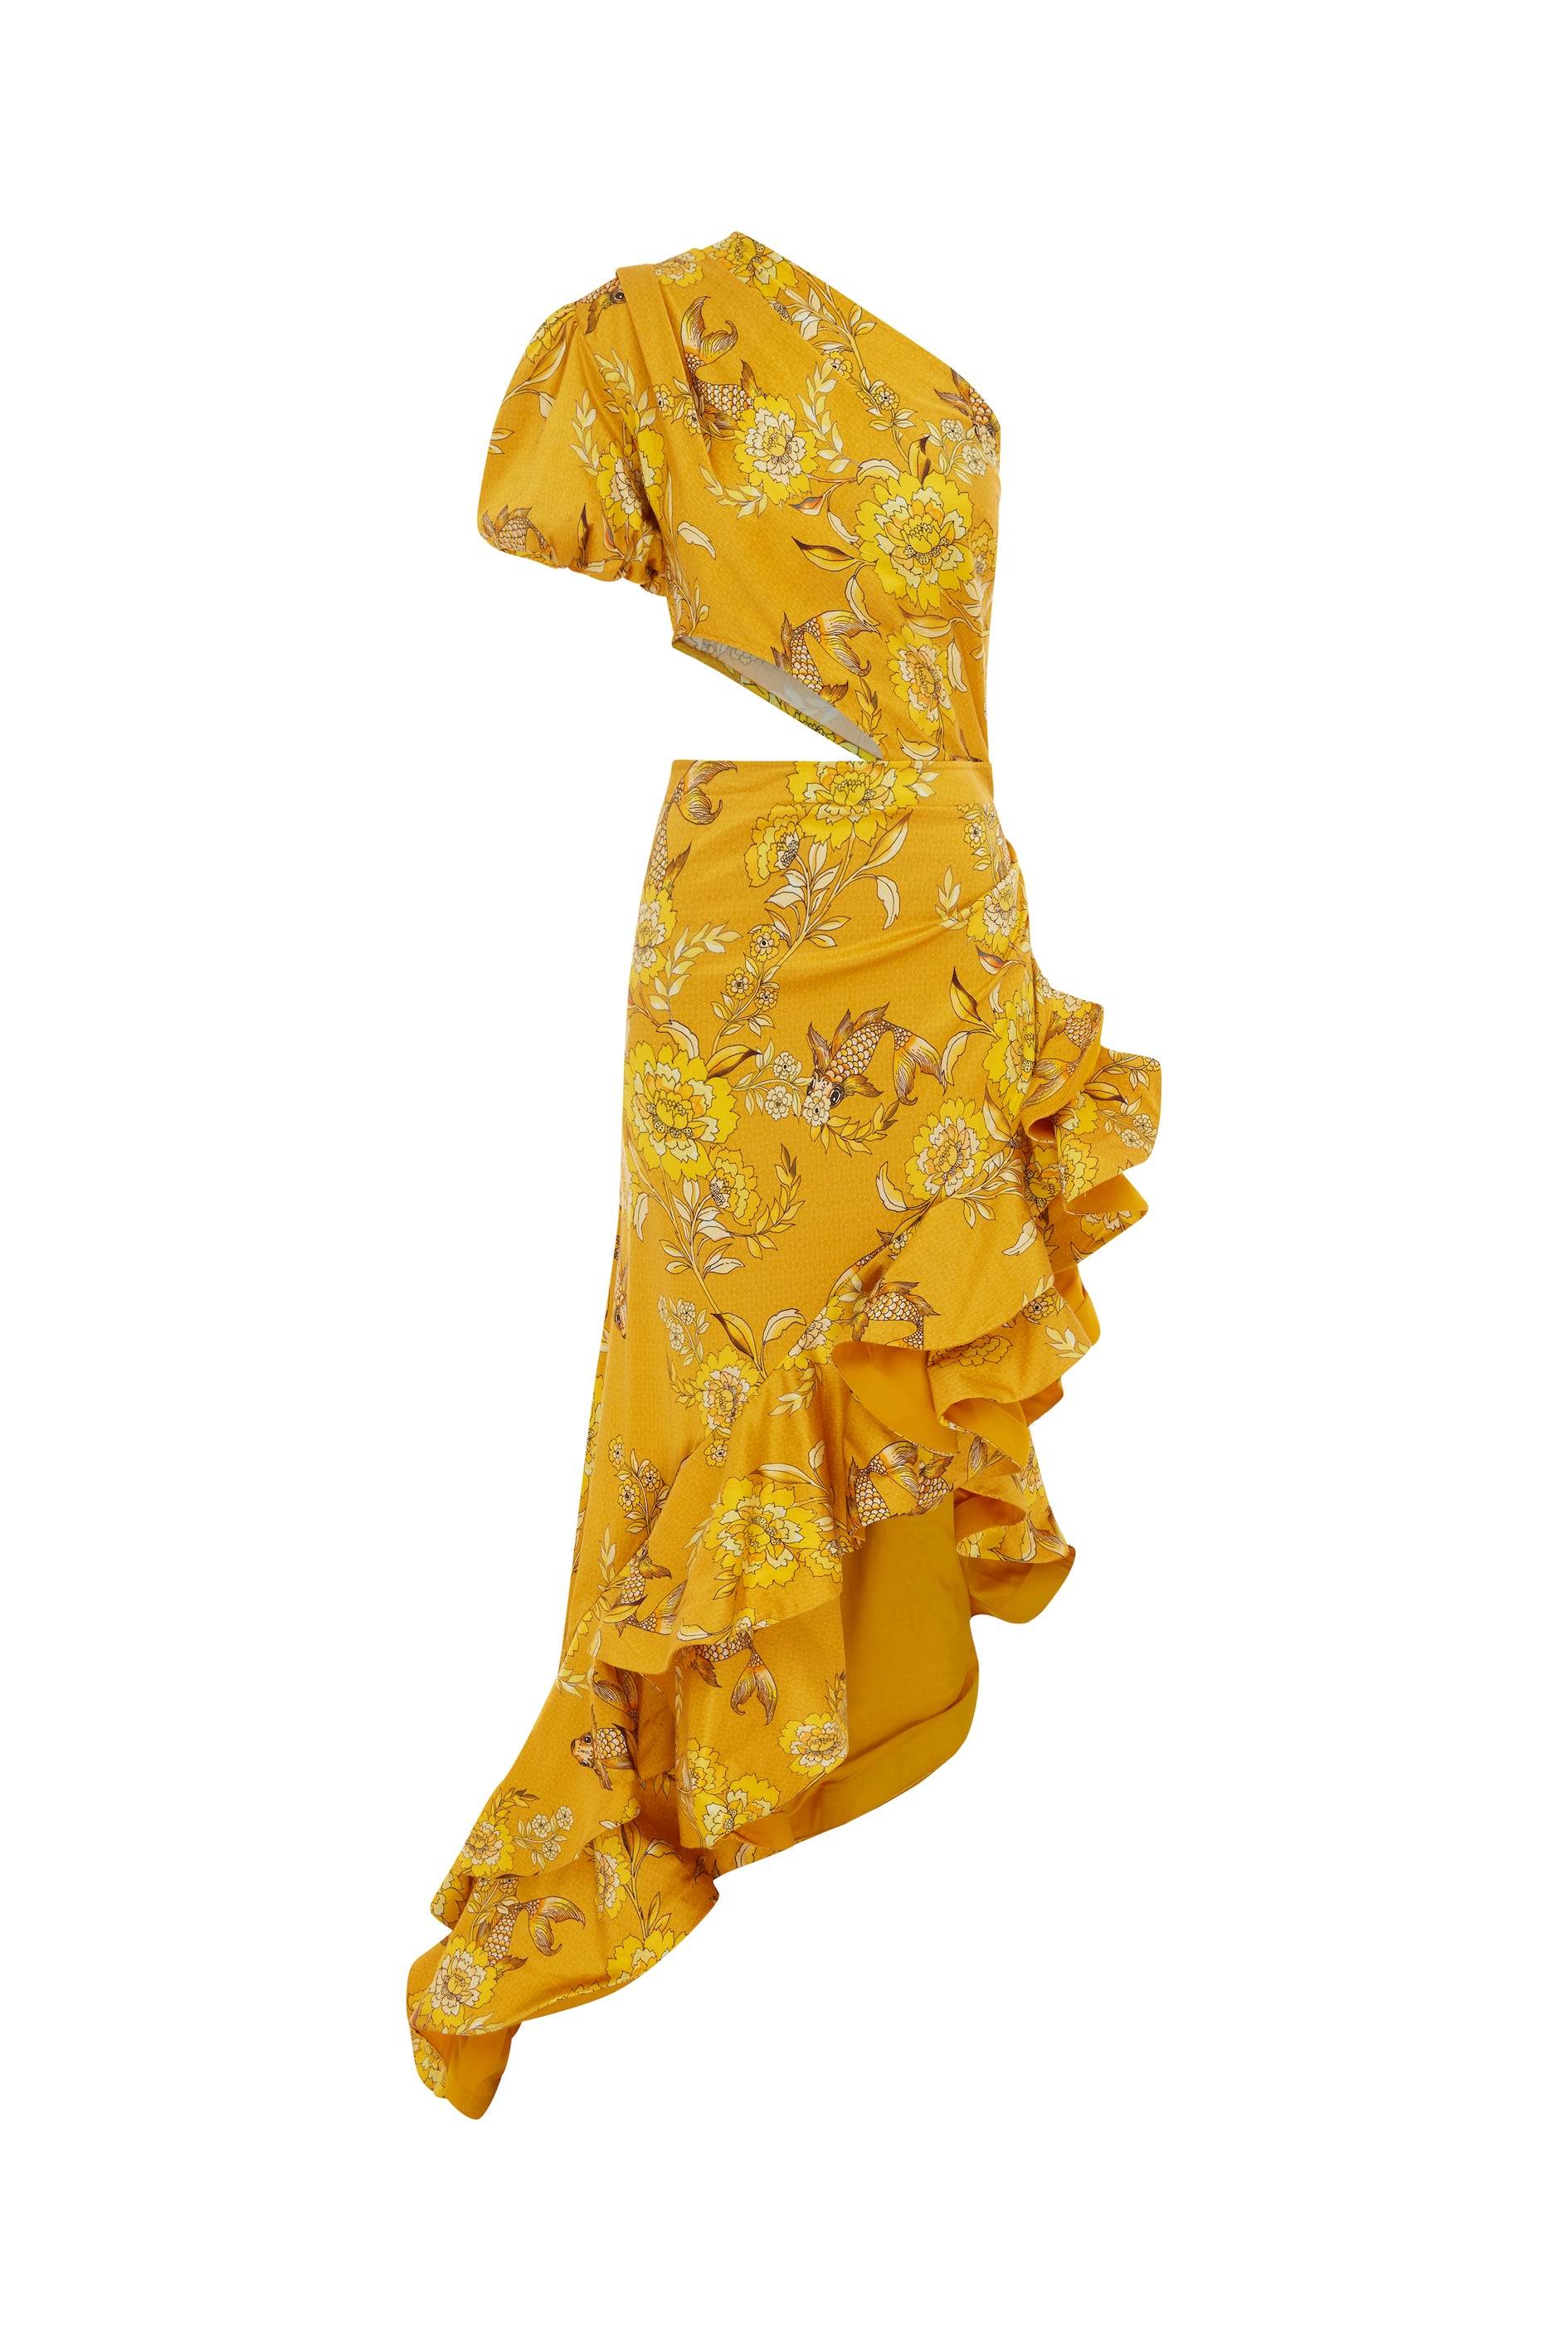 Khaki hand printed maiden dress – Golden Hour